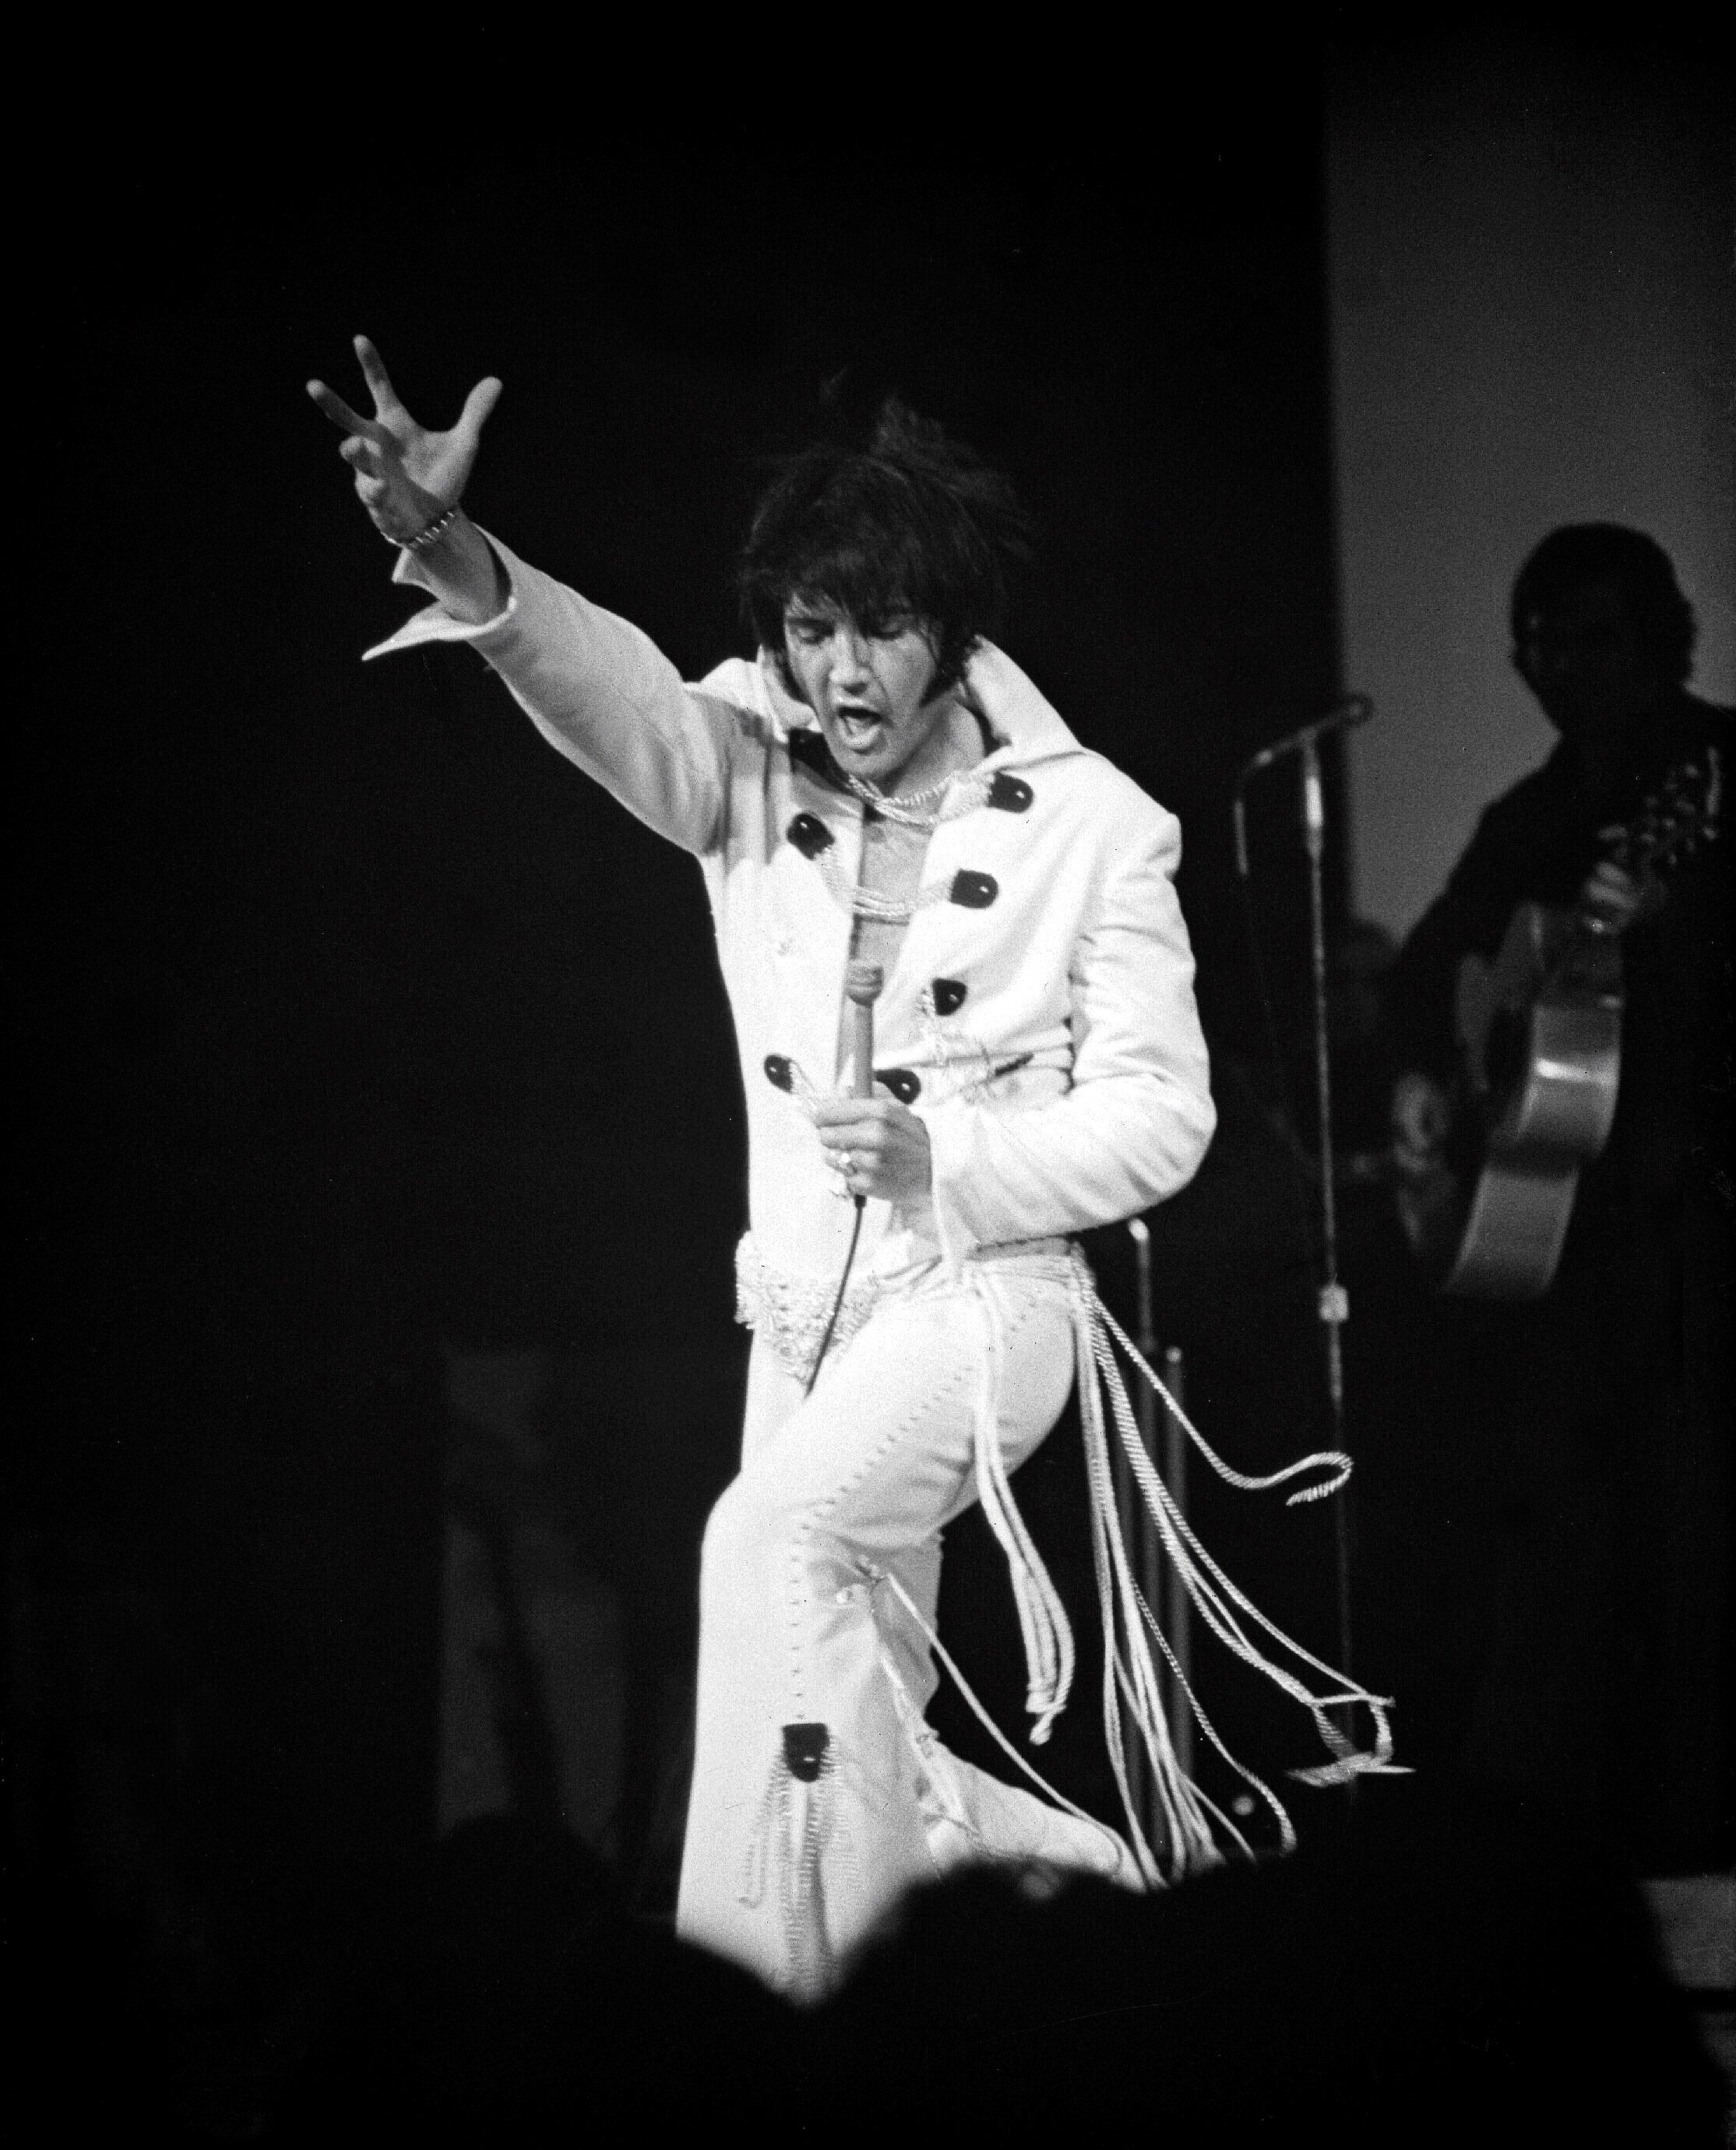 Elvis Presley performing on stage in his trademark white jumpsuit